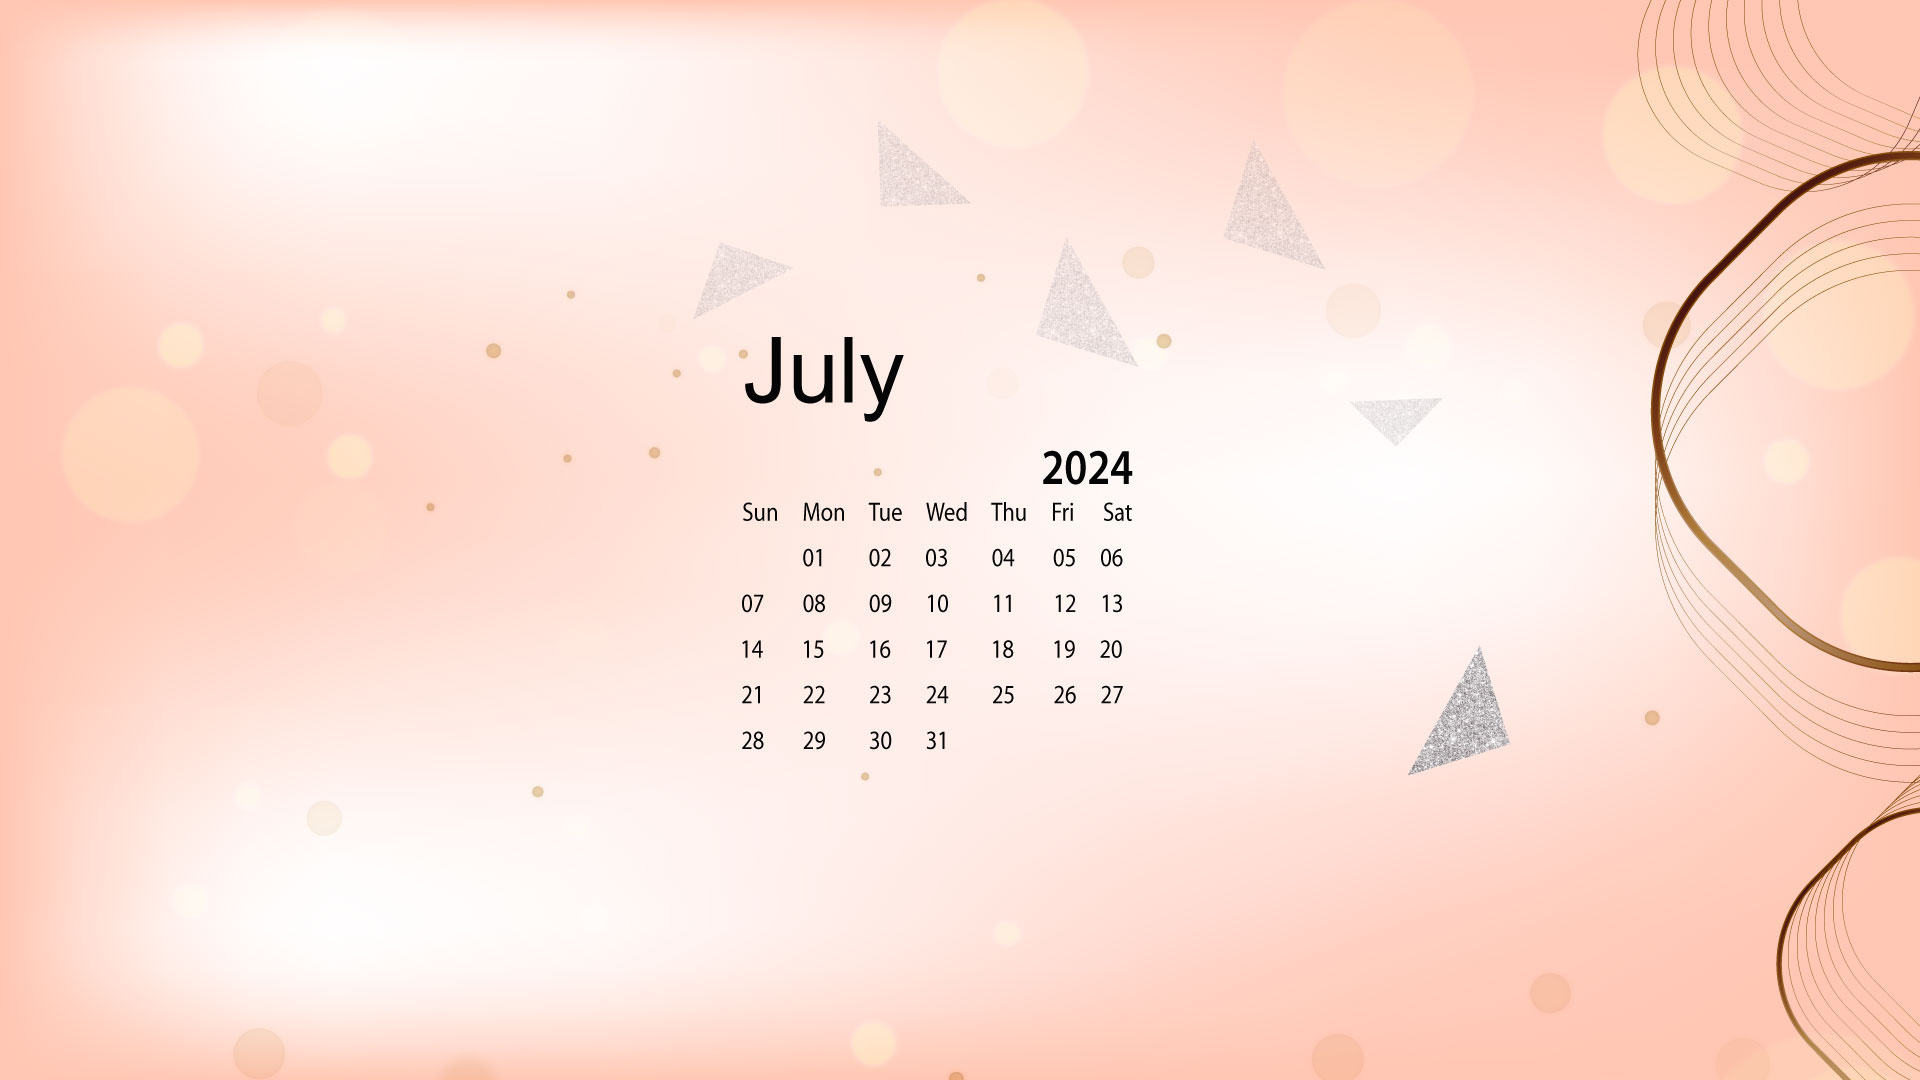 July 2024 Desktop Wallpaper Calendar - Calendarlabs intended for July 2024 Background Calendar